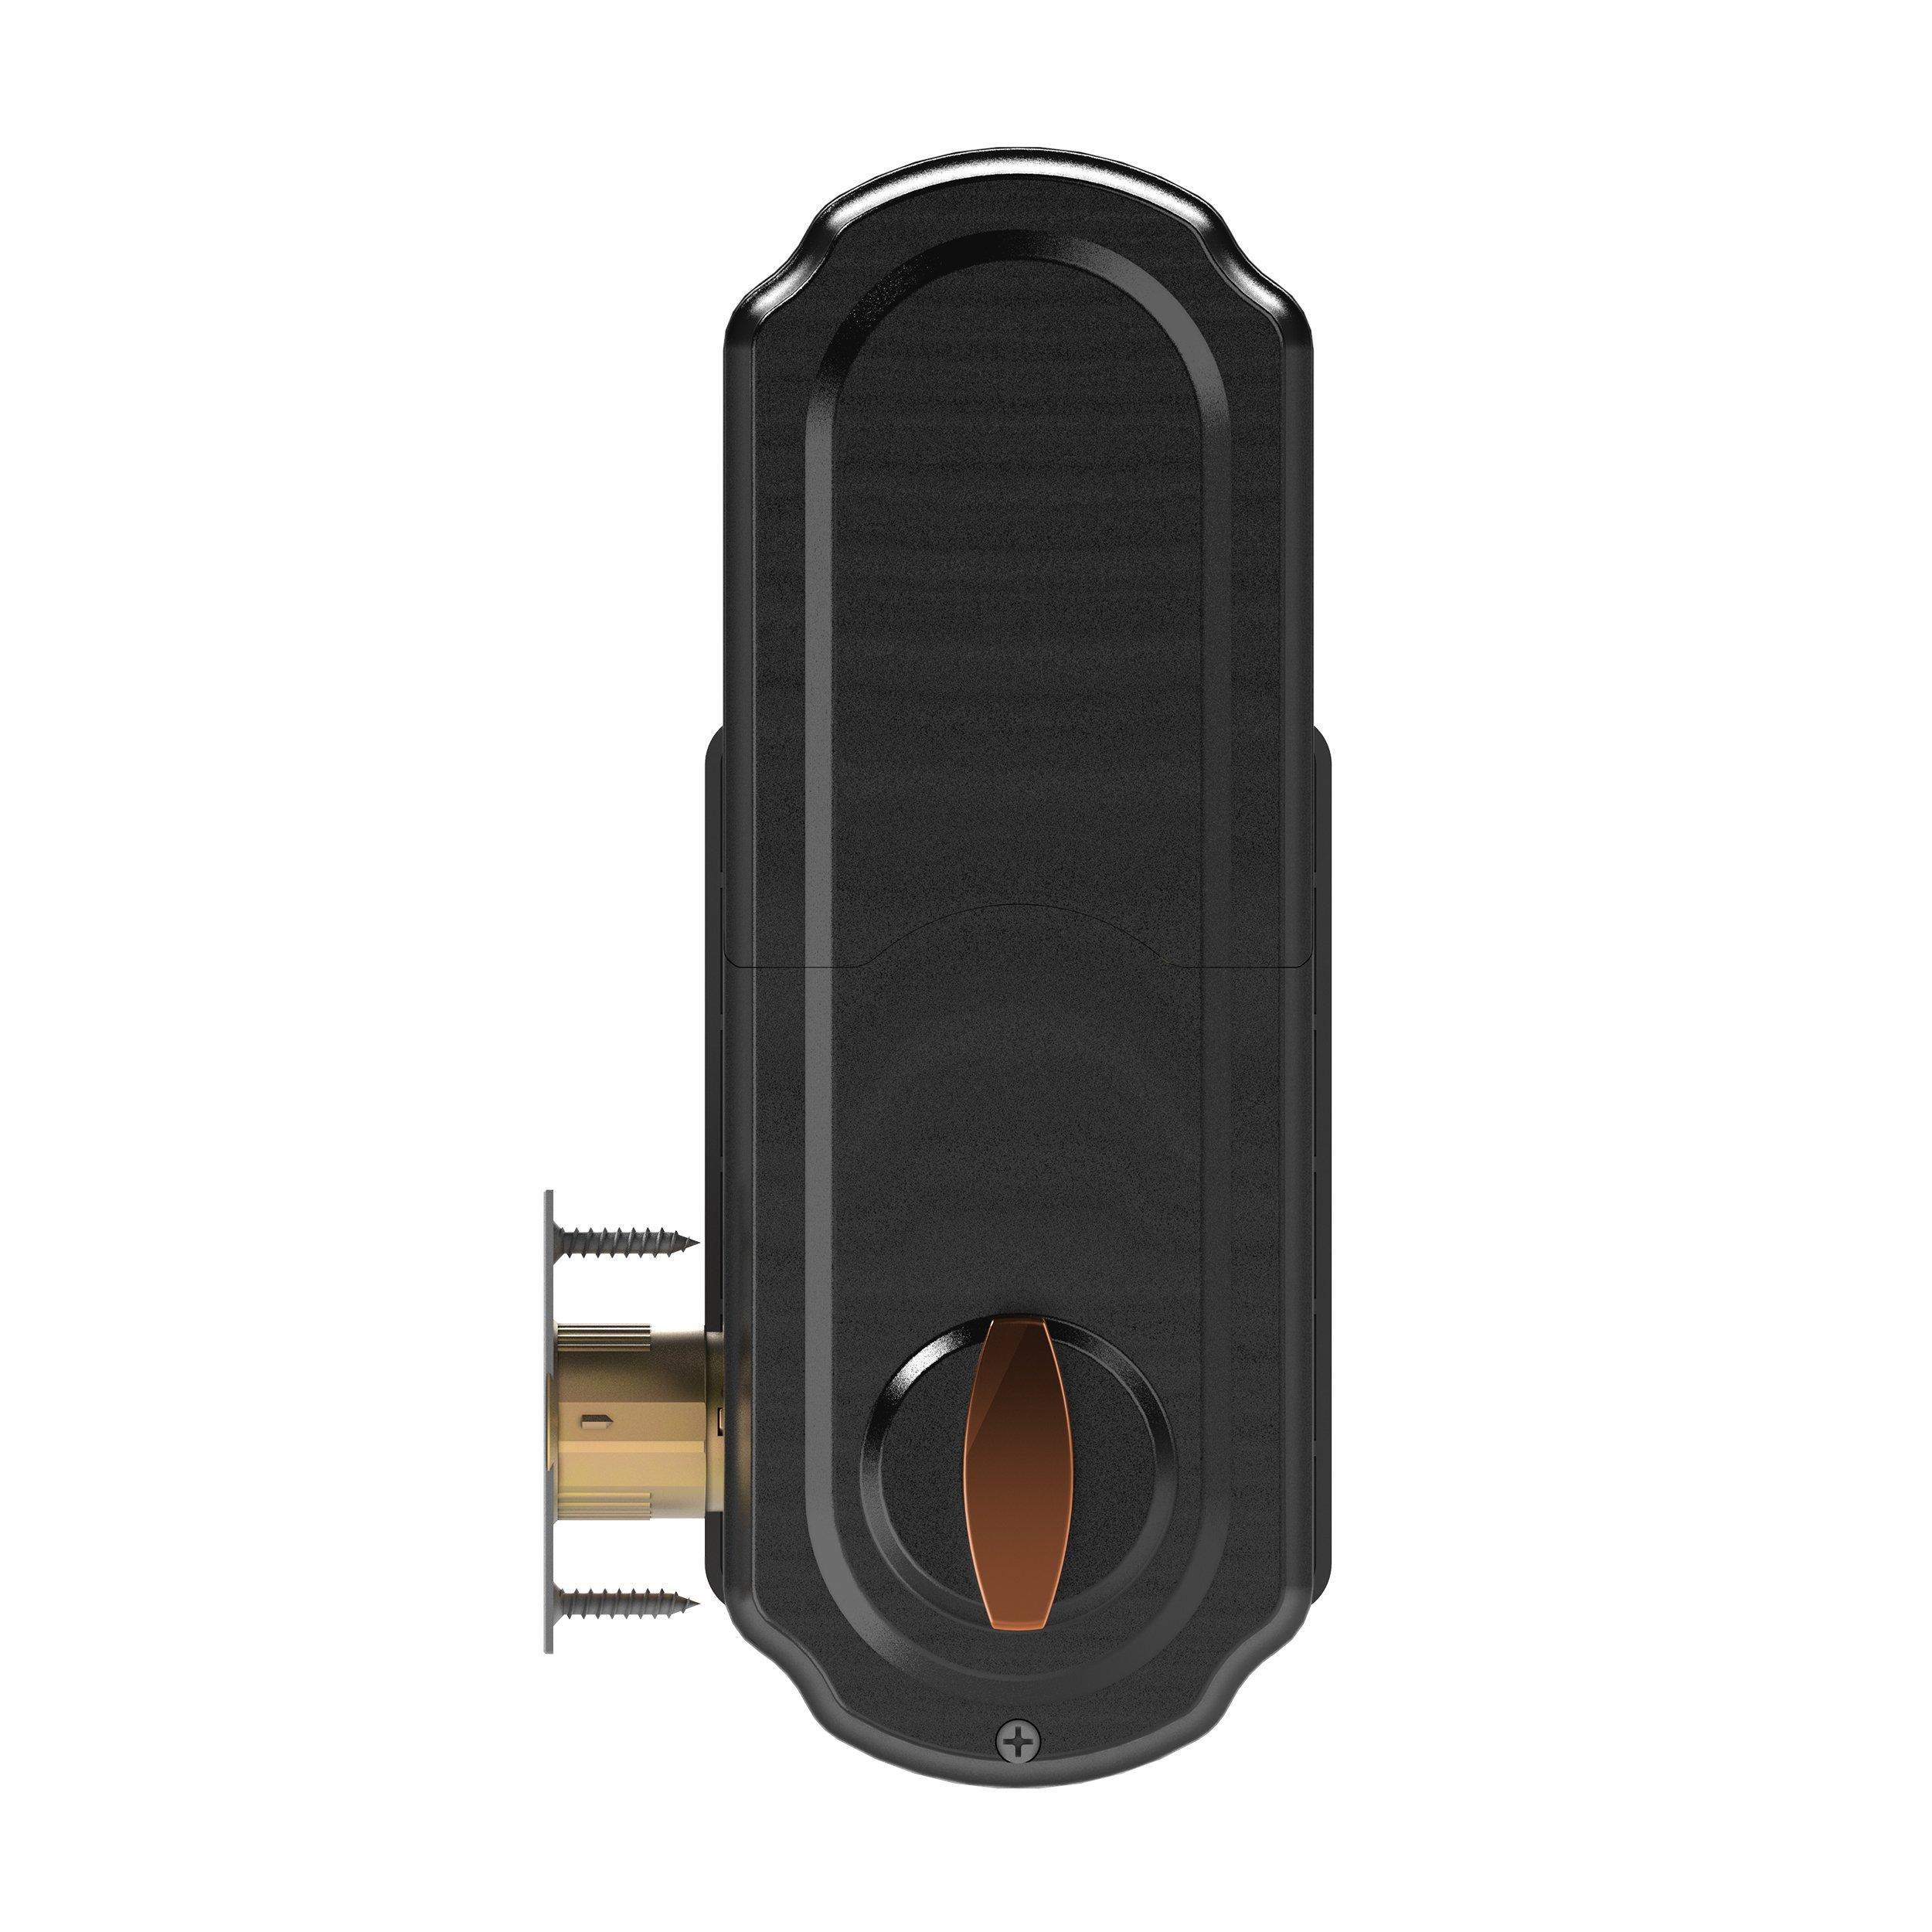 list item 5 of 7 TurboLock TL117 Smart Lock with Keypad and Voice Prompts Bronze